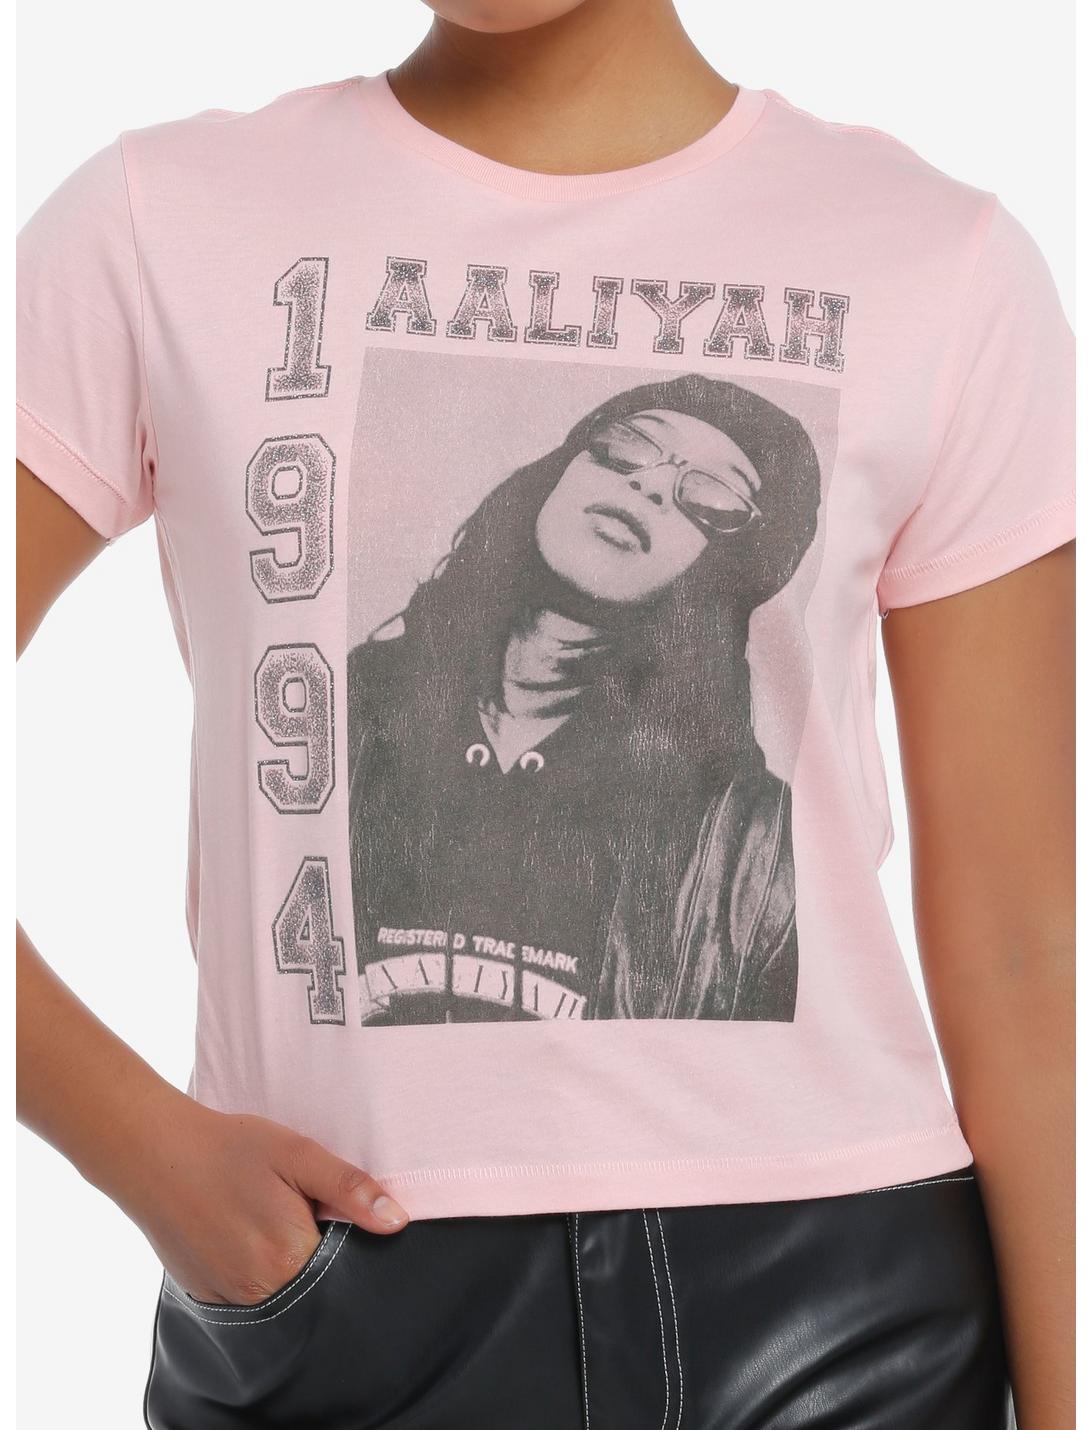 Aaliyah Portrait 1994 Glitter Girls Baby T-Shirt, PINK, hi-res